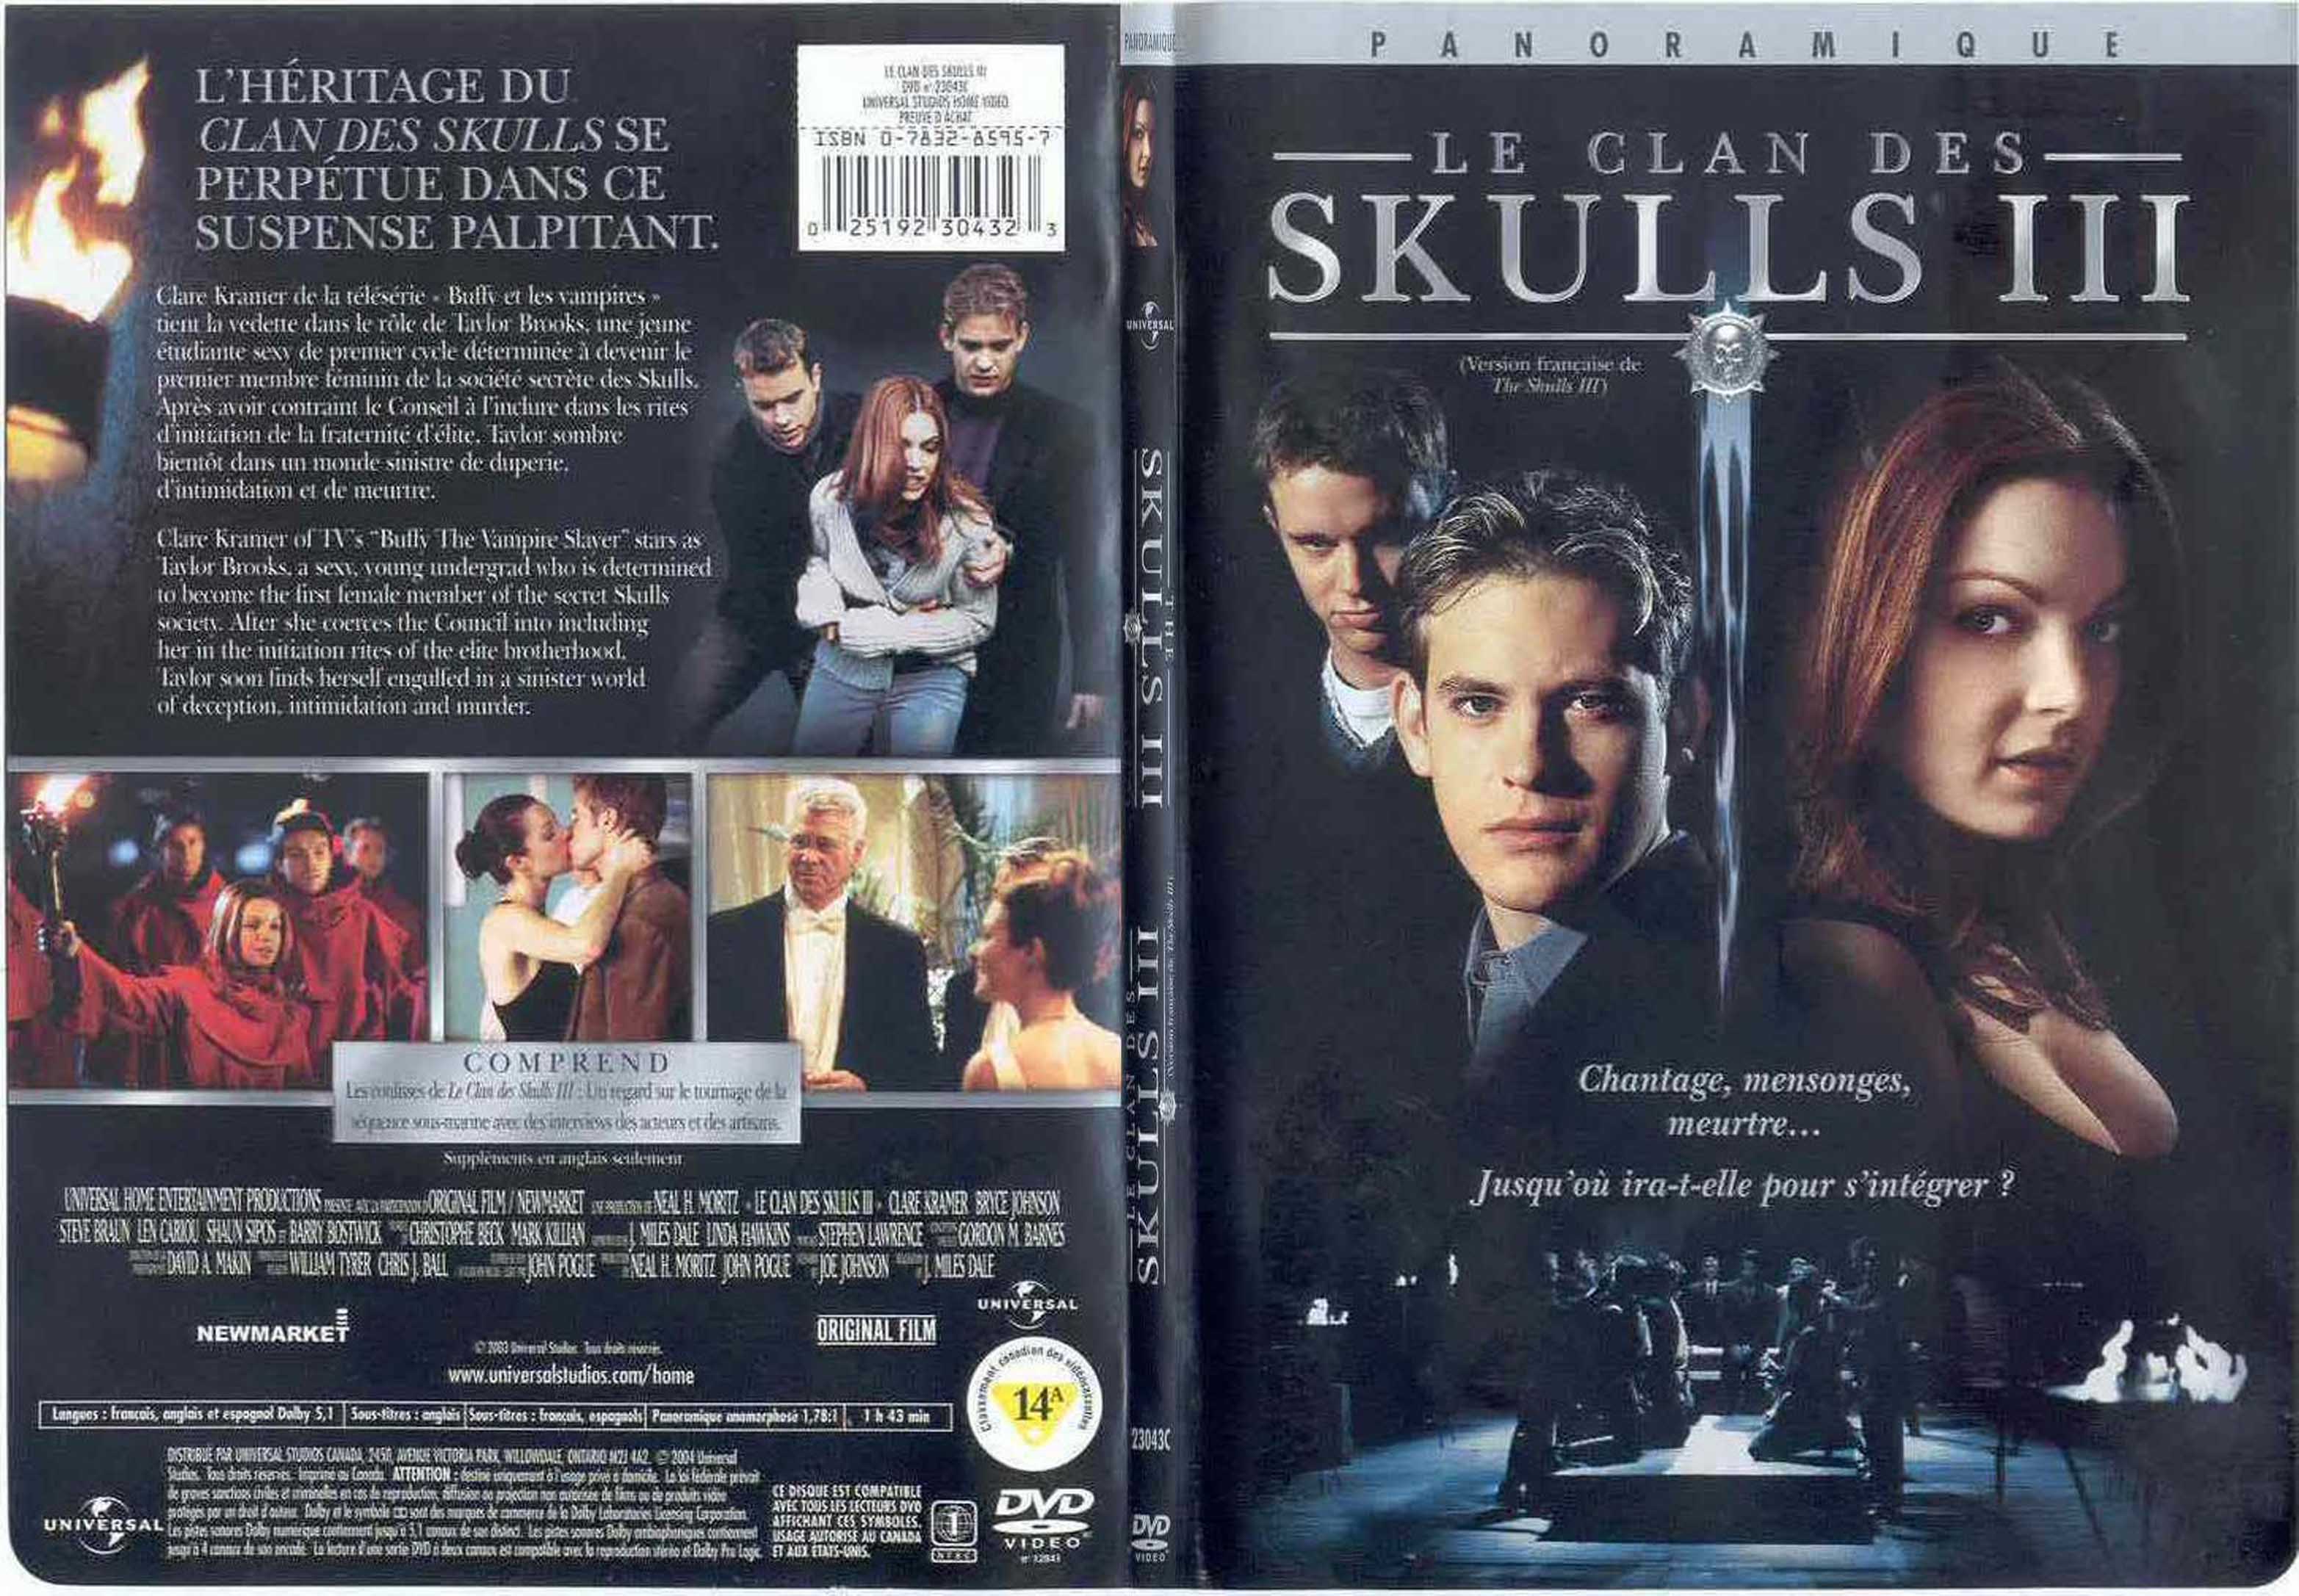 Jaquette DVD The skulls 3 - SLIM